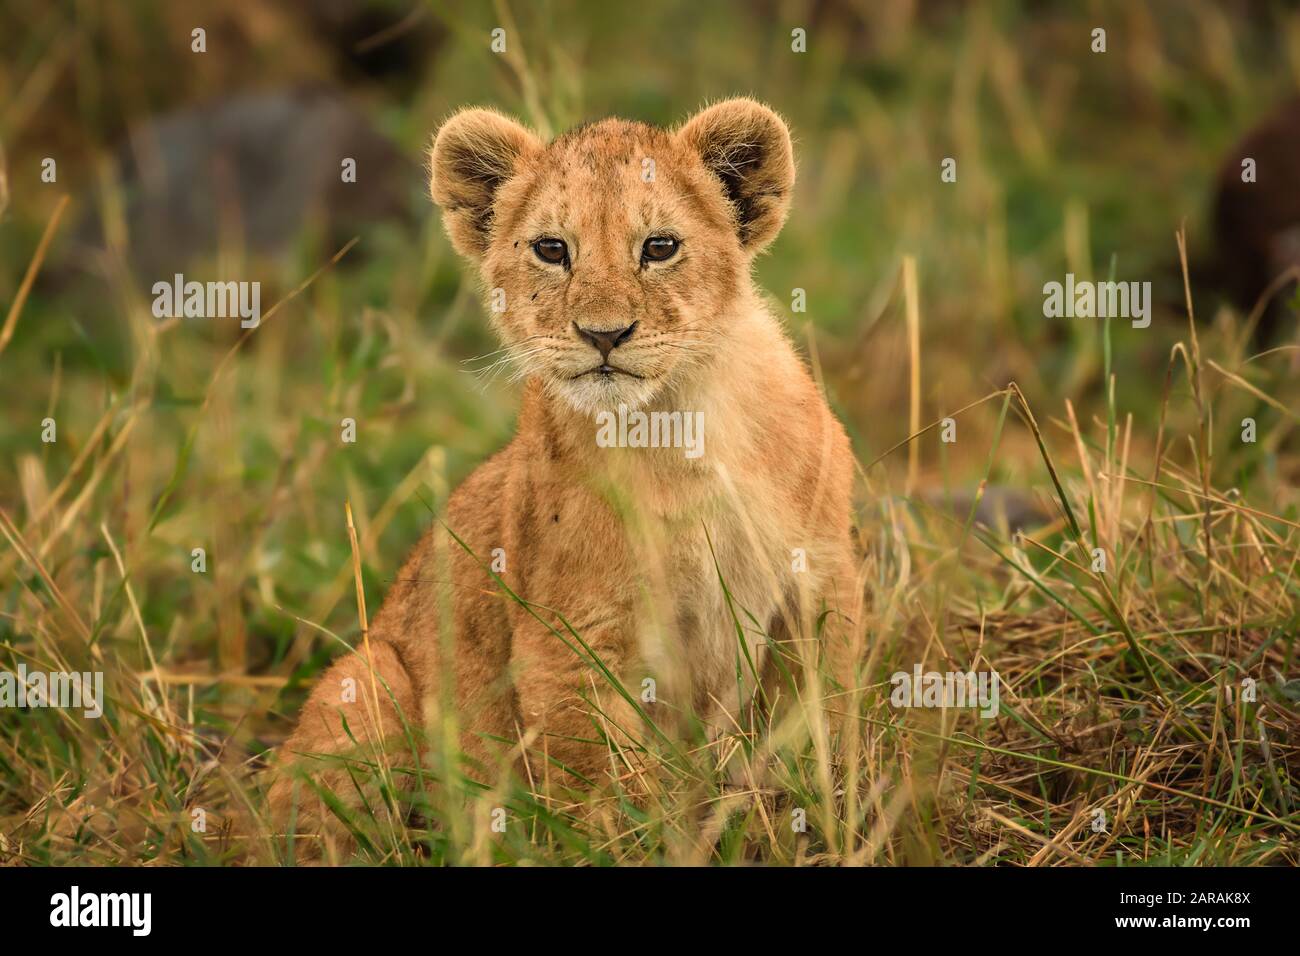 Cute cachorro de león mirando a la cámara, Maasai Mara, Kenia Foto de stock